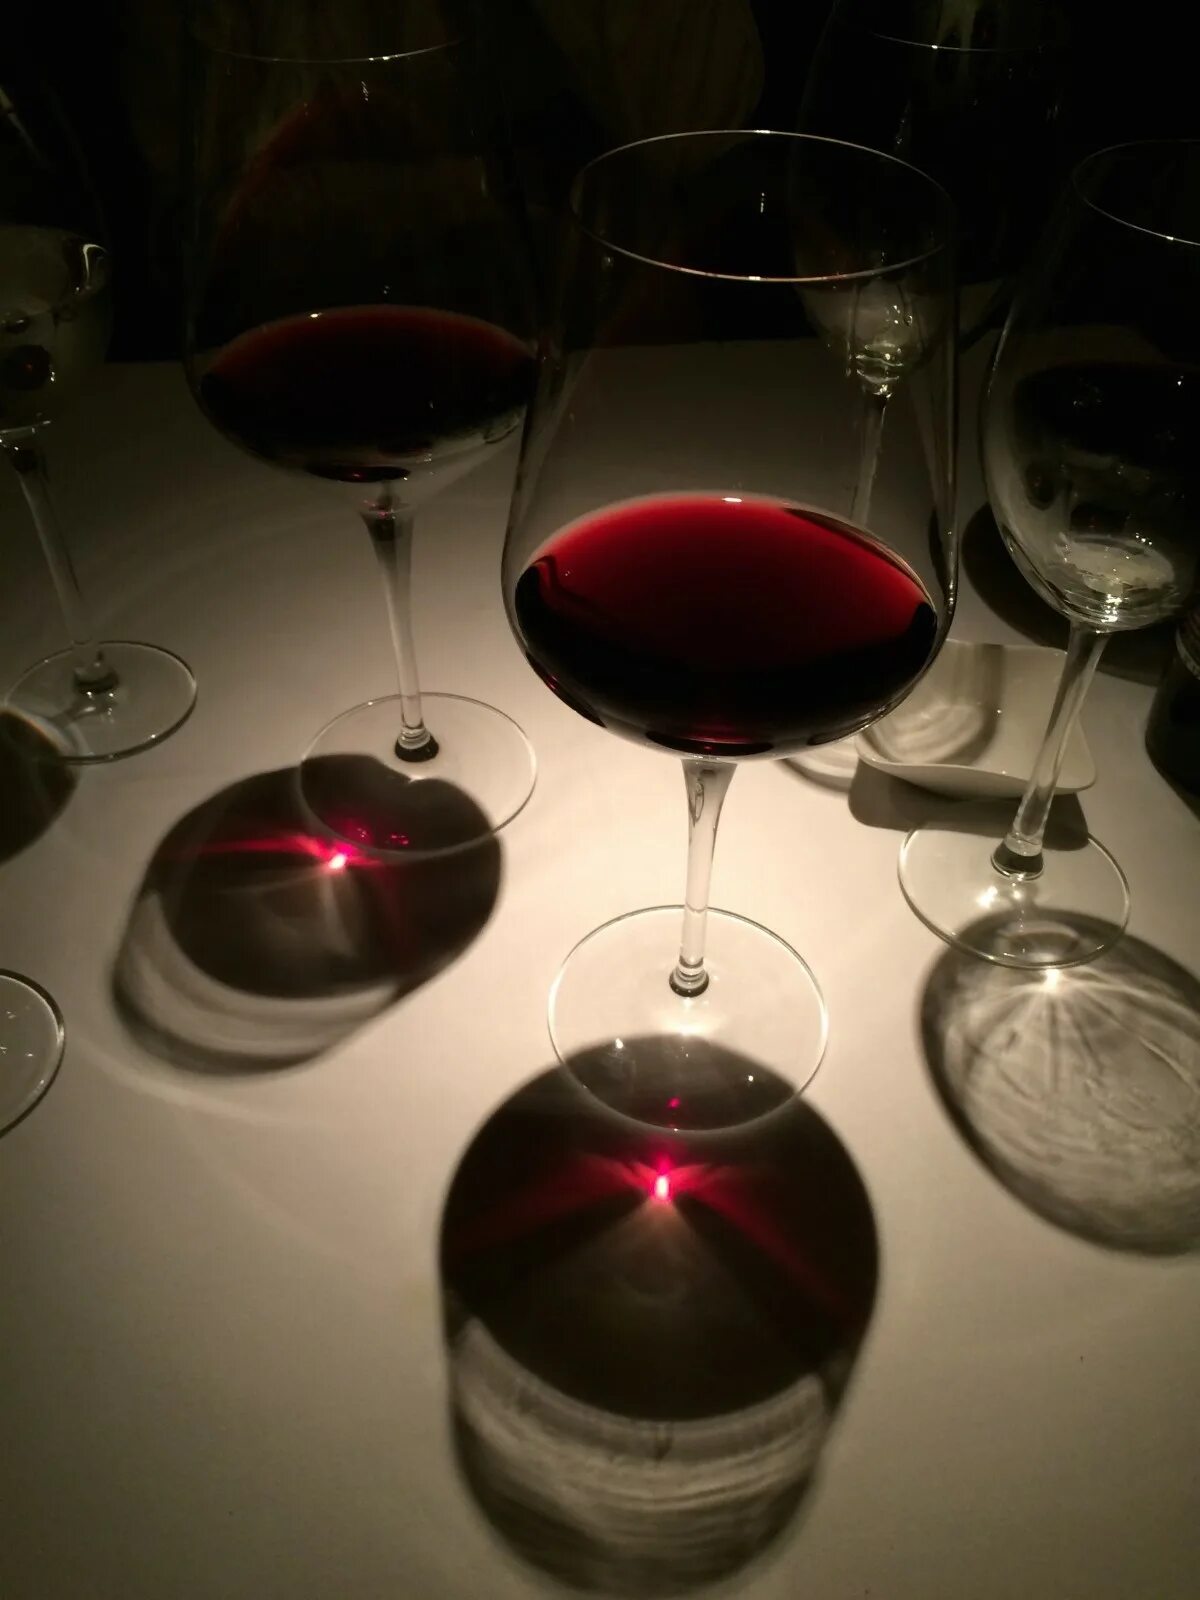 Бокал вина на столе. Бокал с вином. Бокалы на столе. Столик с вином.